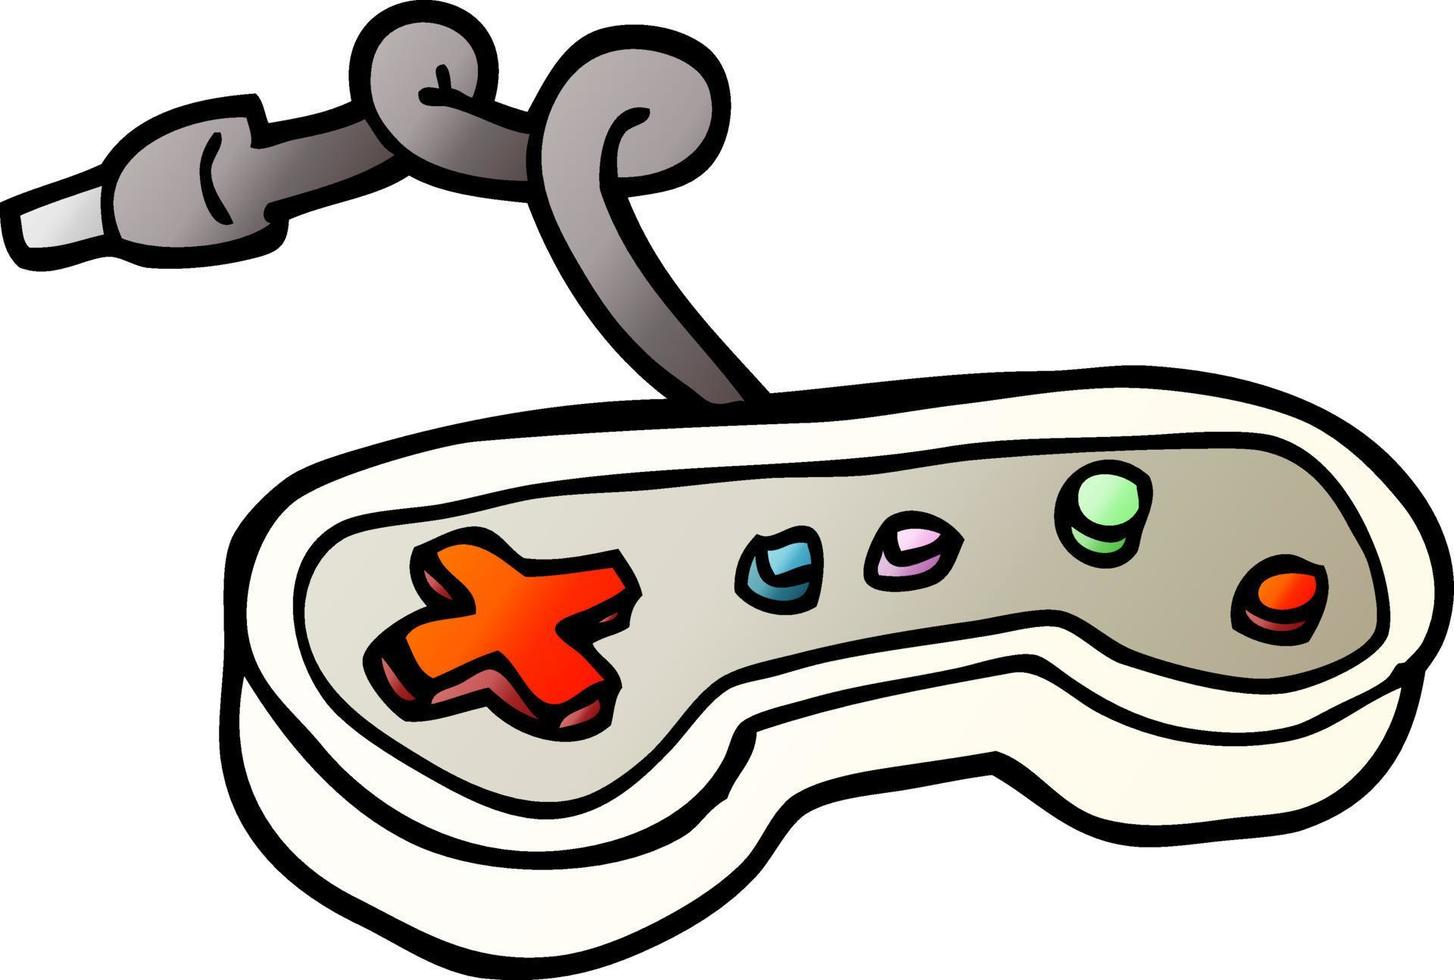 vektor lutning illustration tecknad serie spel kontrollant